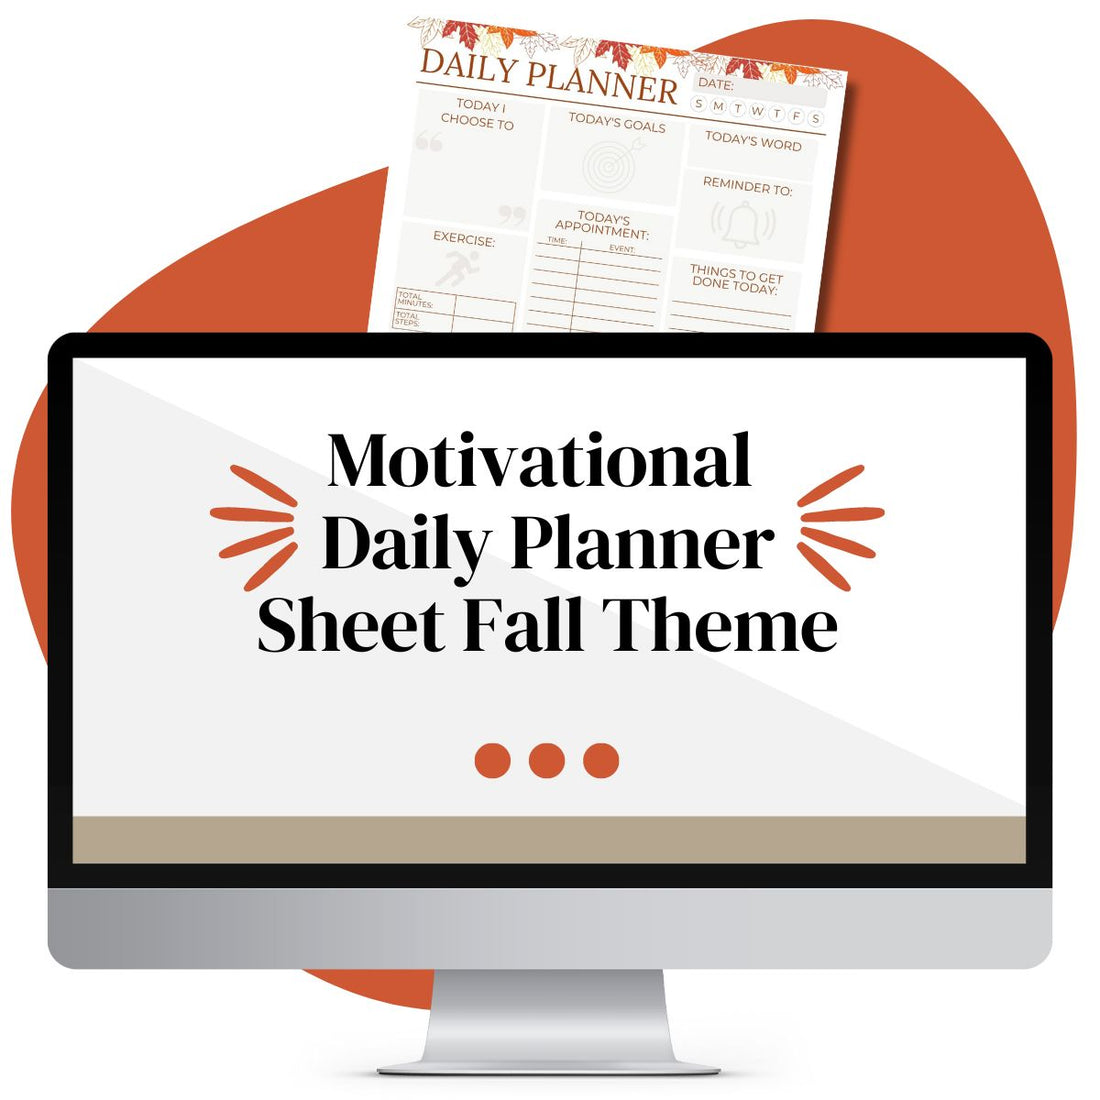 Motivational Daily Planner Sheet Fall Theme